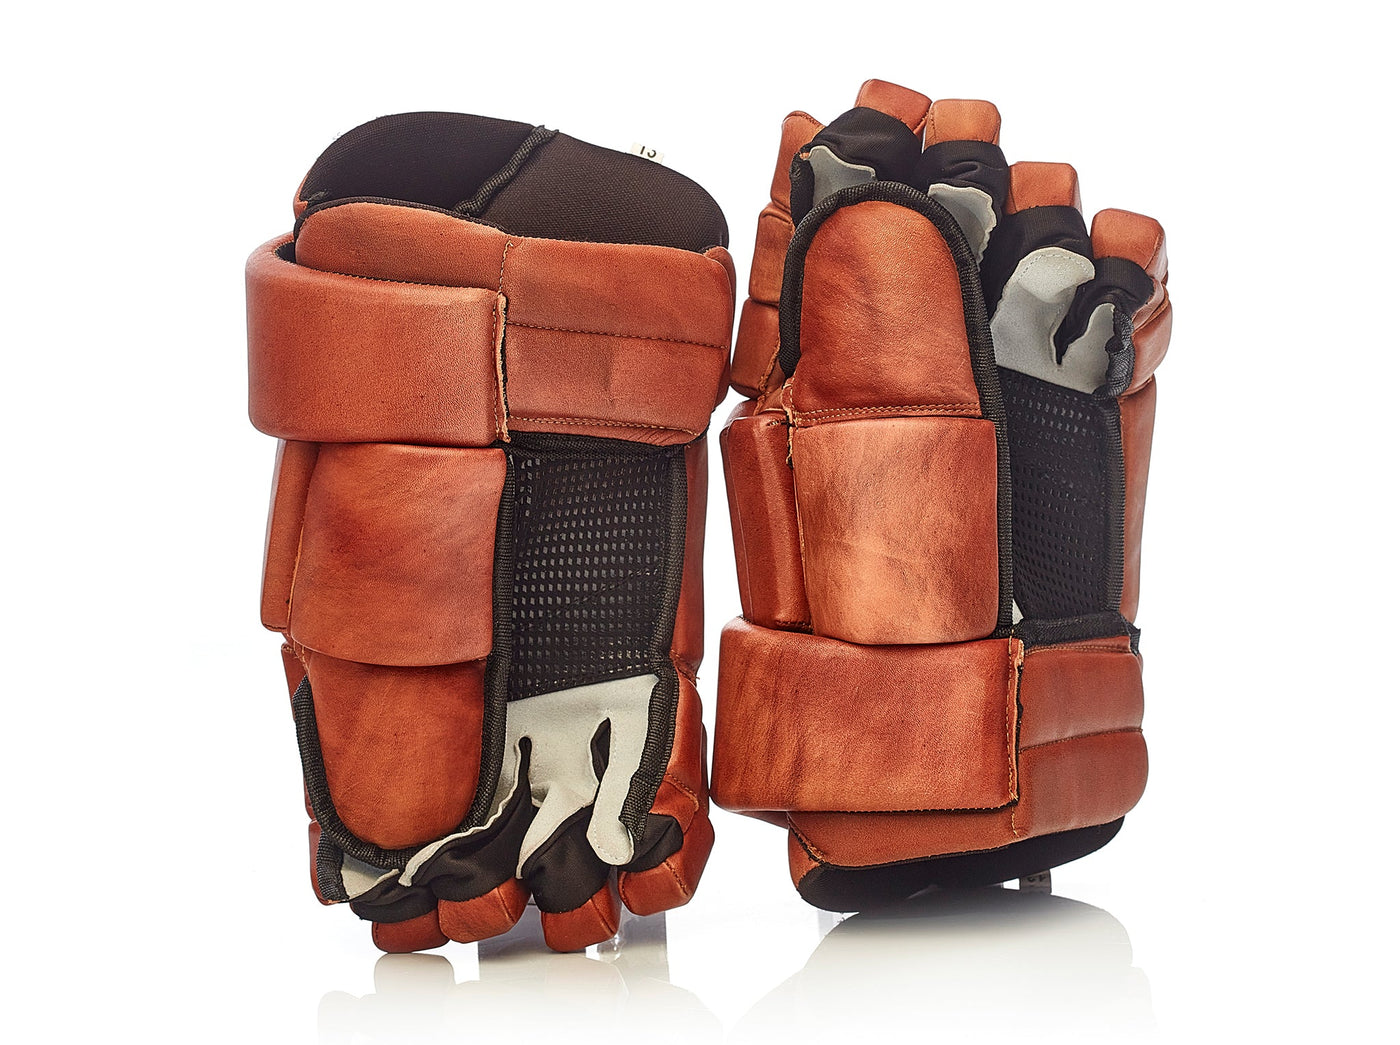 PRO Heritage Brown Leather Ice Hockey Gloves 2.0 - MODEST VINTAGE PLAYER LTD